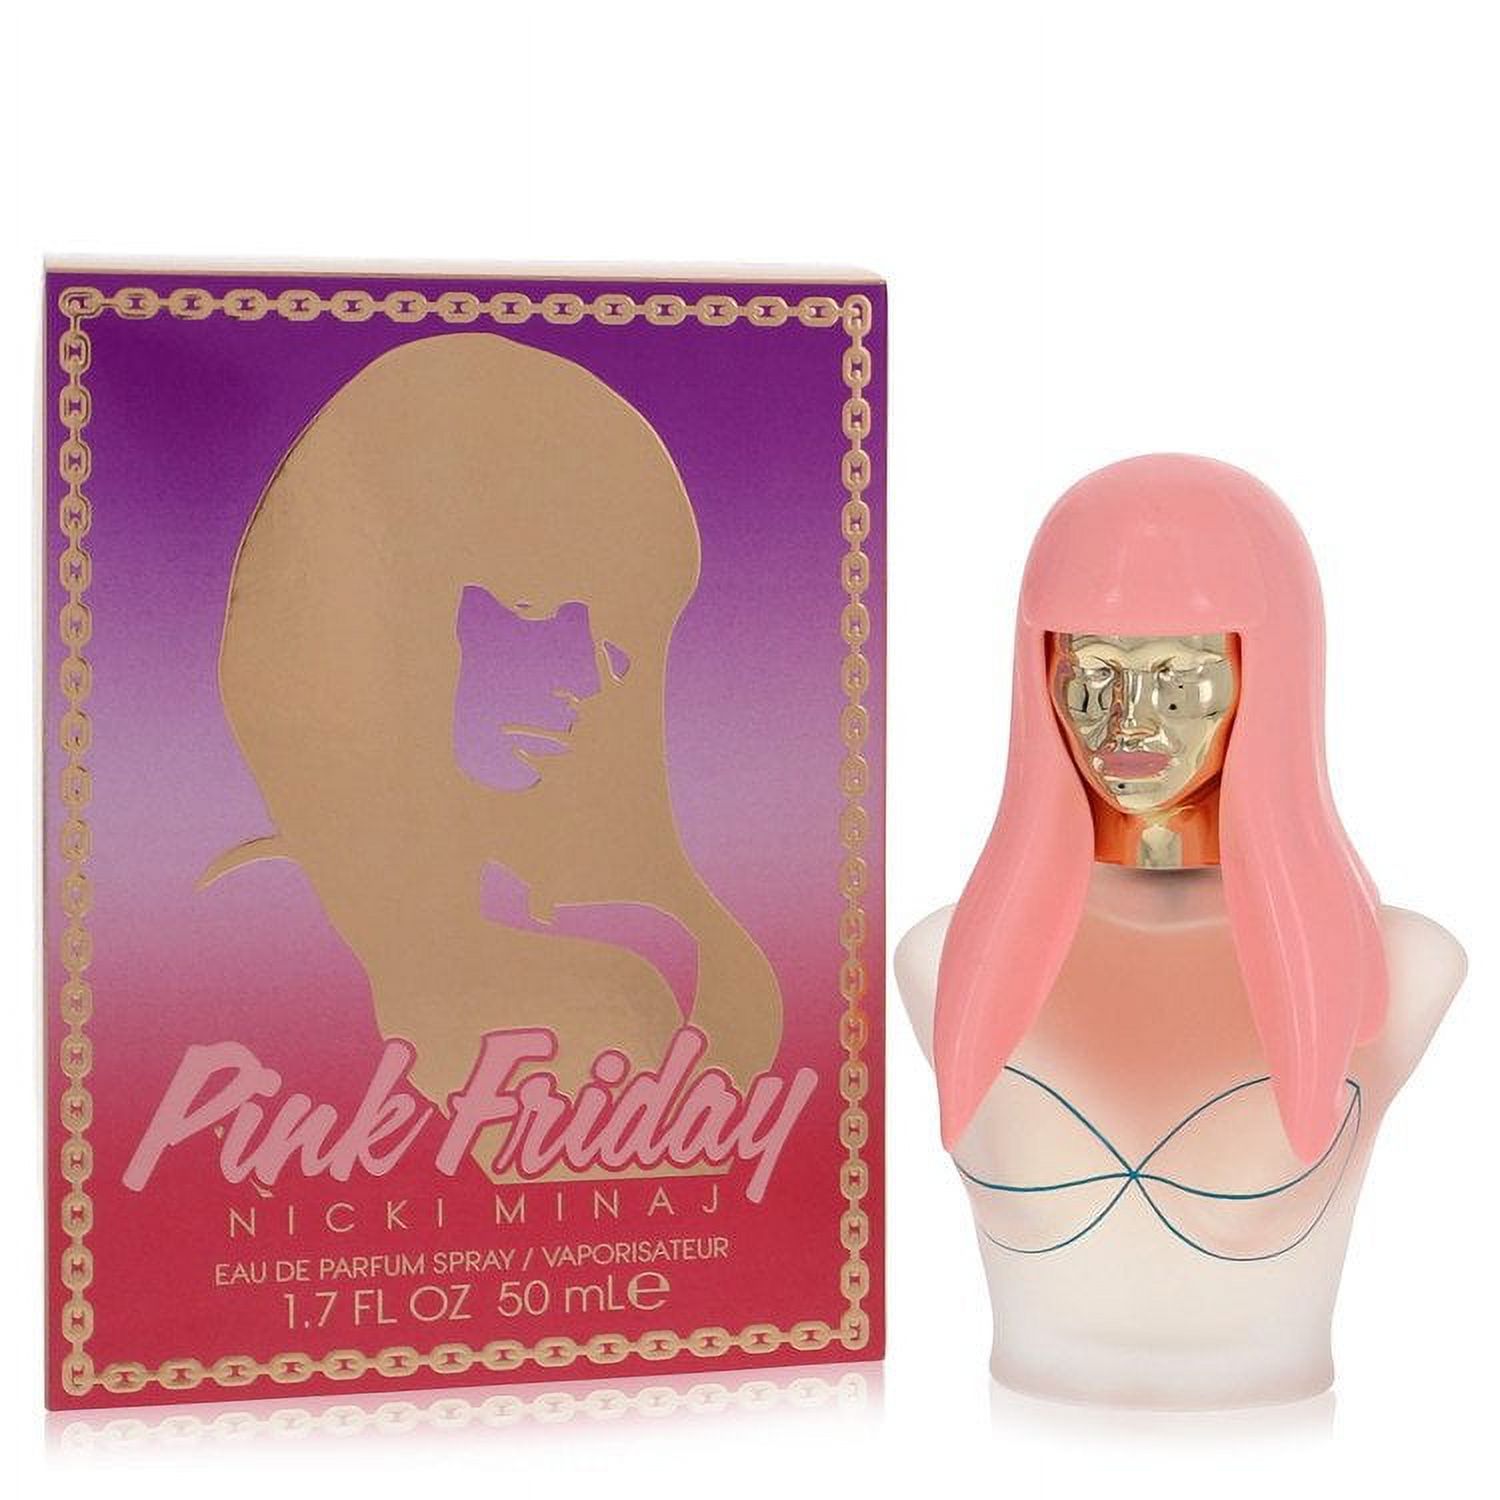 Pink Friday by Nicki Minaj Eau De Parfum Spray 1.7 oz for Women - image 1 of 2